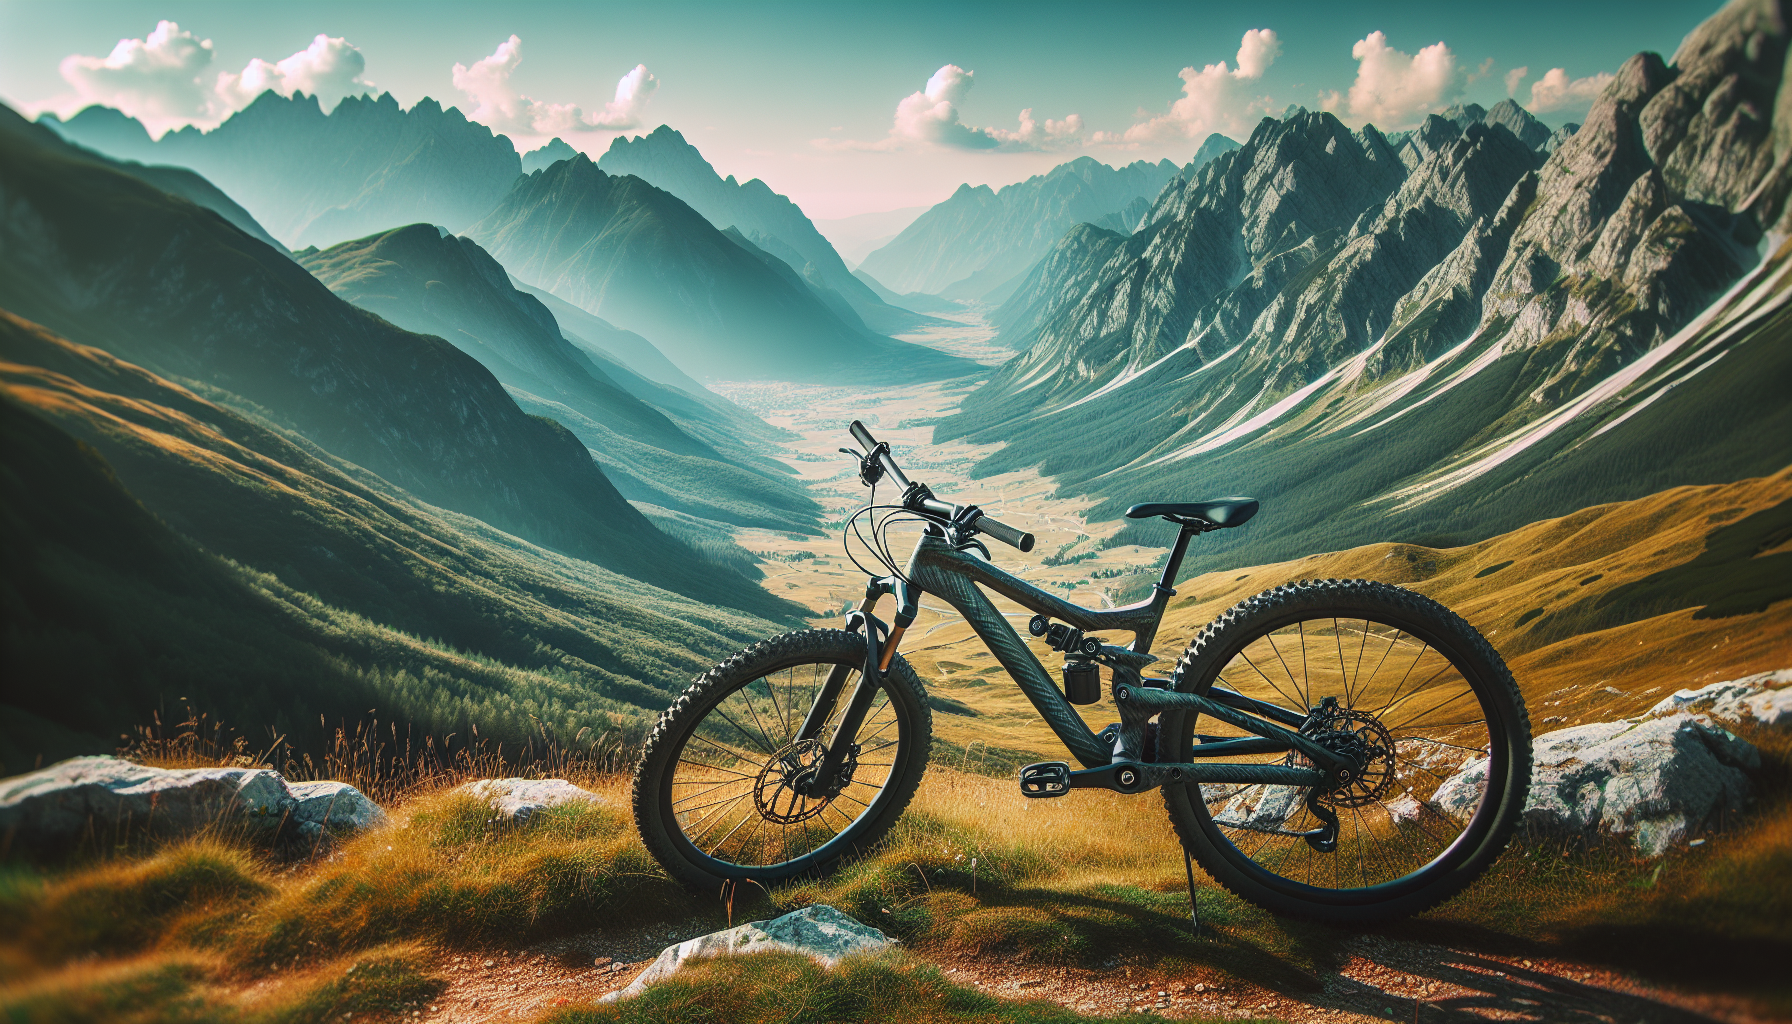 Mountain Views: Jim Thorpe Bike Rental Recommendations?